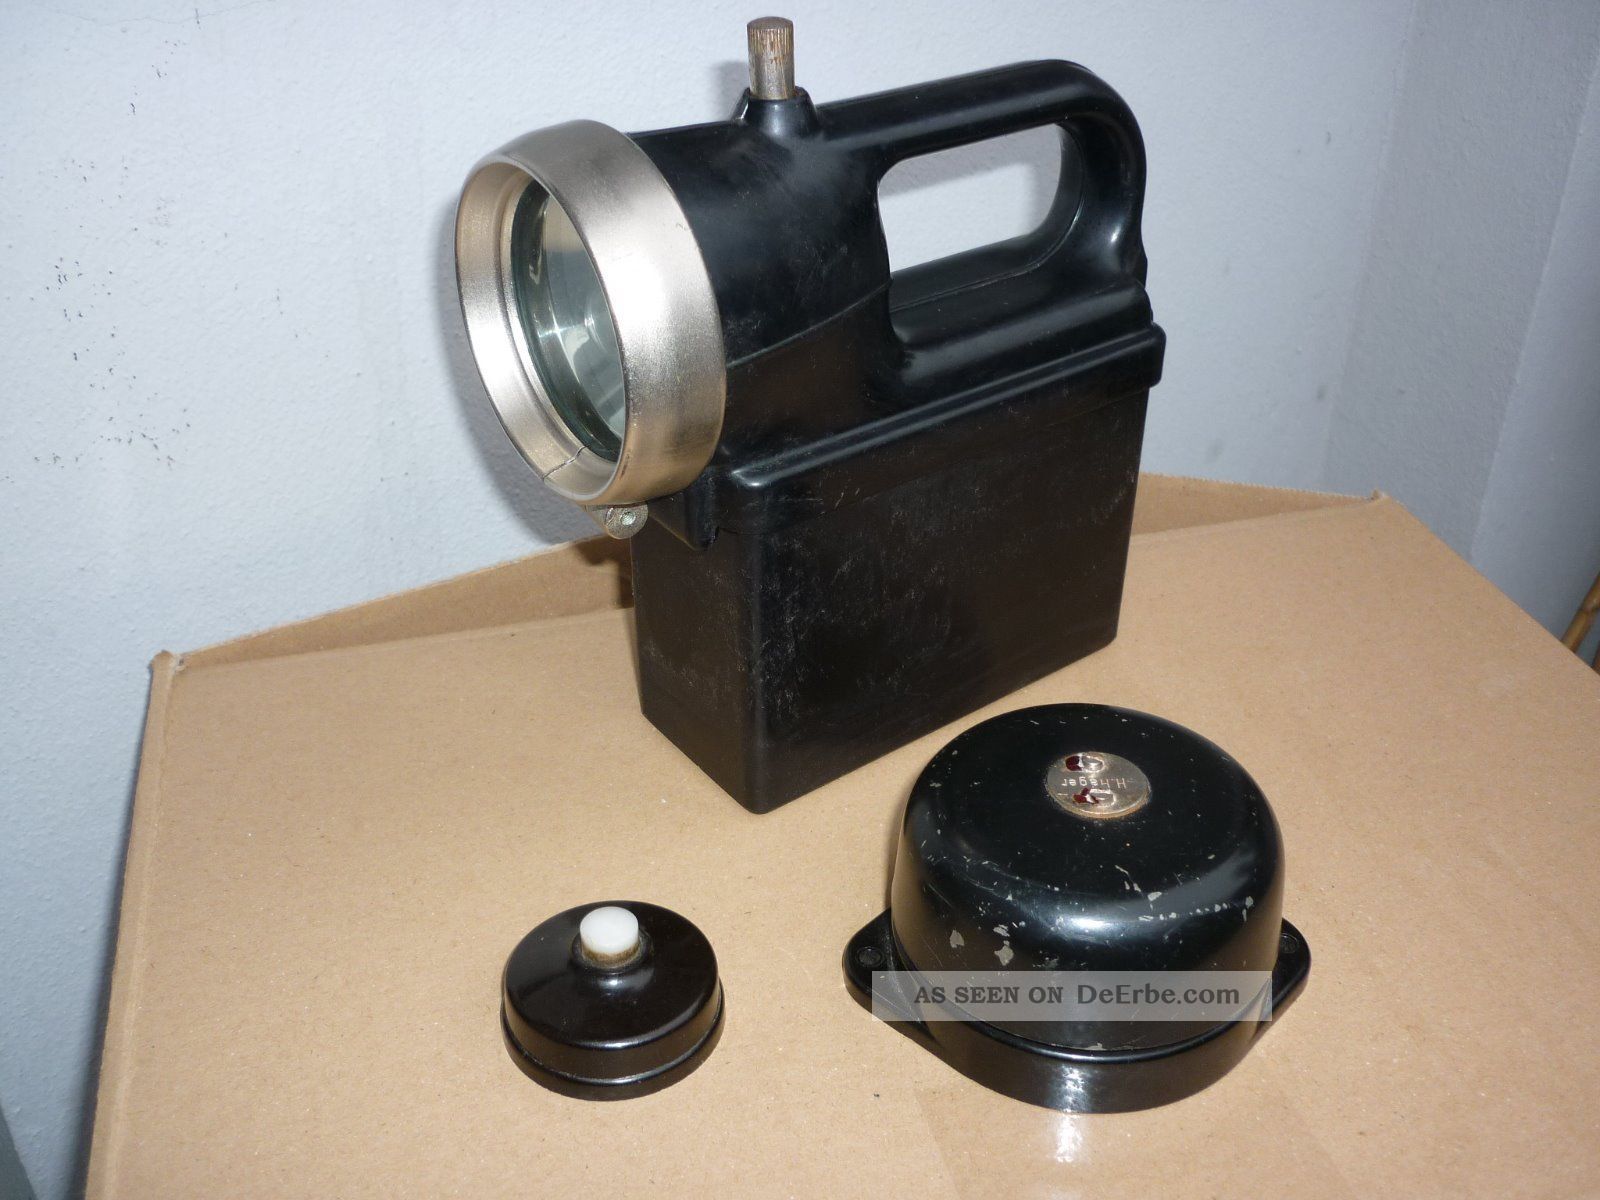 Konvolut Elektro Klingel Klingelknopf Batterie Grubenlampe Bakelit 50er Jahre Original, vor 1960 gefertigt Bild